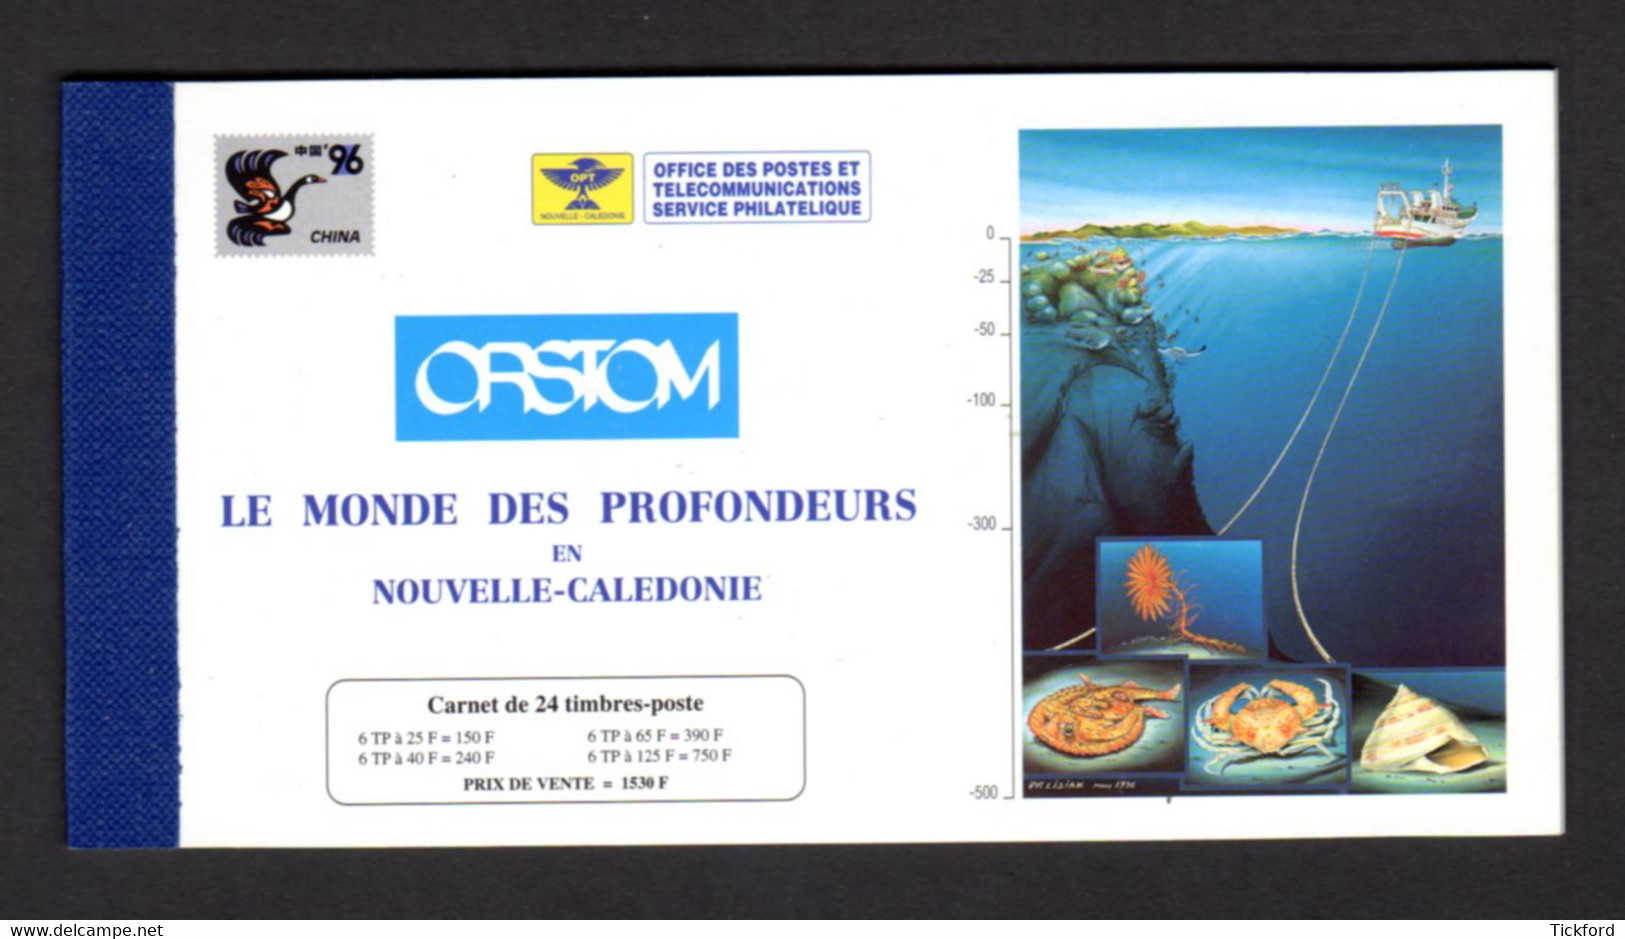 NOUVELLE CALEDONIE 1996 - Yvert N° C710 - Neuf ** / MNH - Orstom, Le Monde Des Profondeurs - Libretti